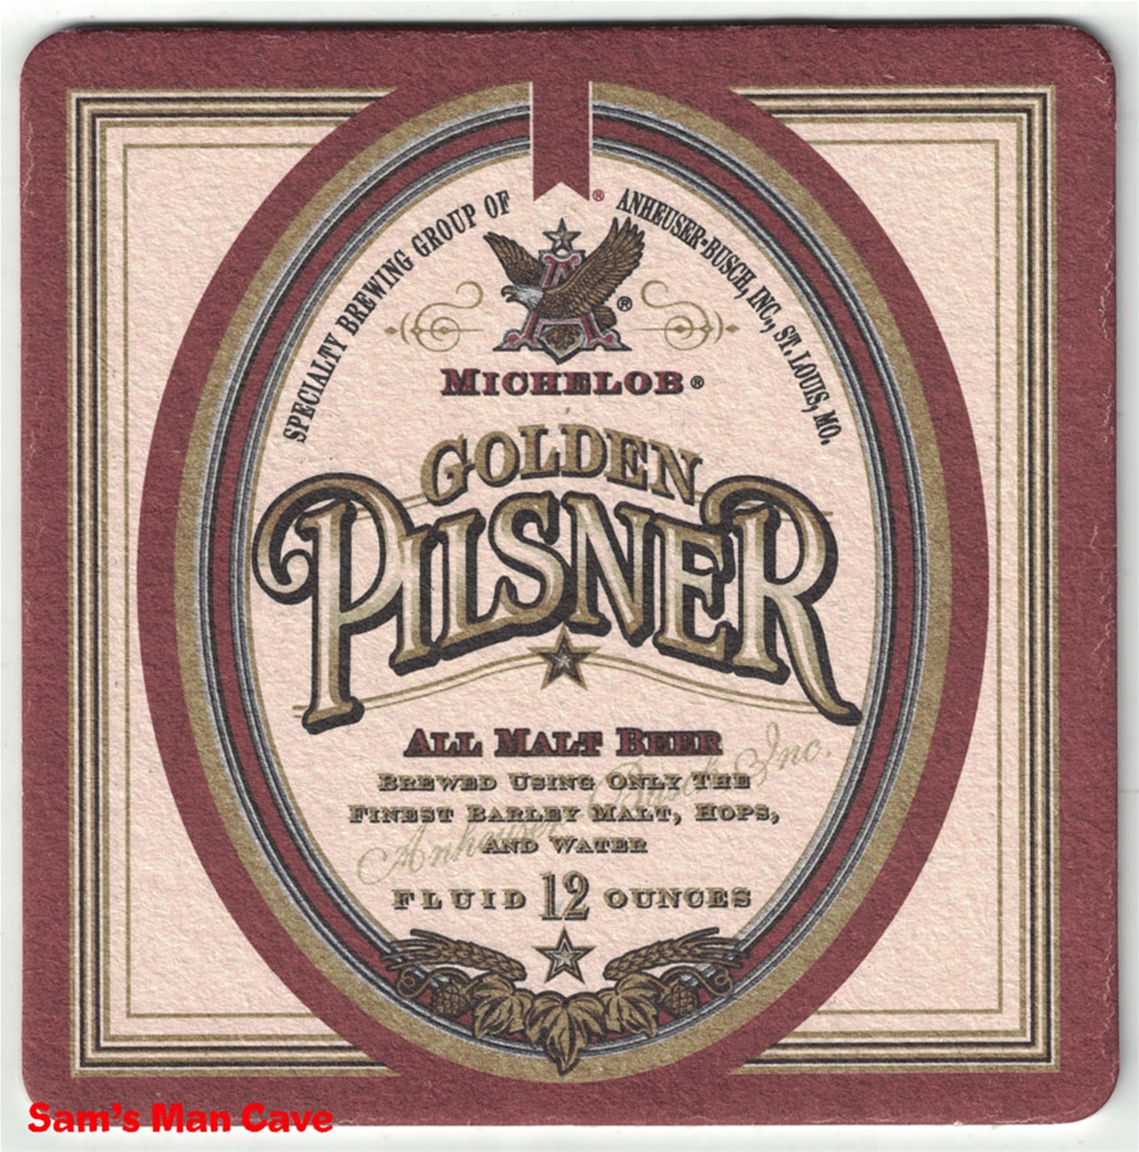 Michelob Golden Pilsner Beer Coaster